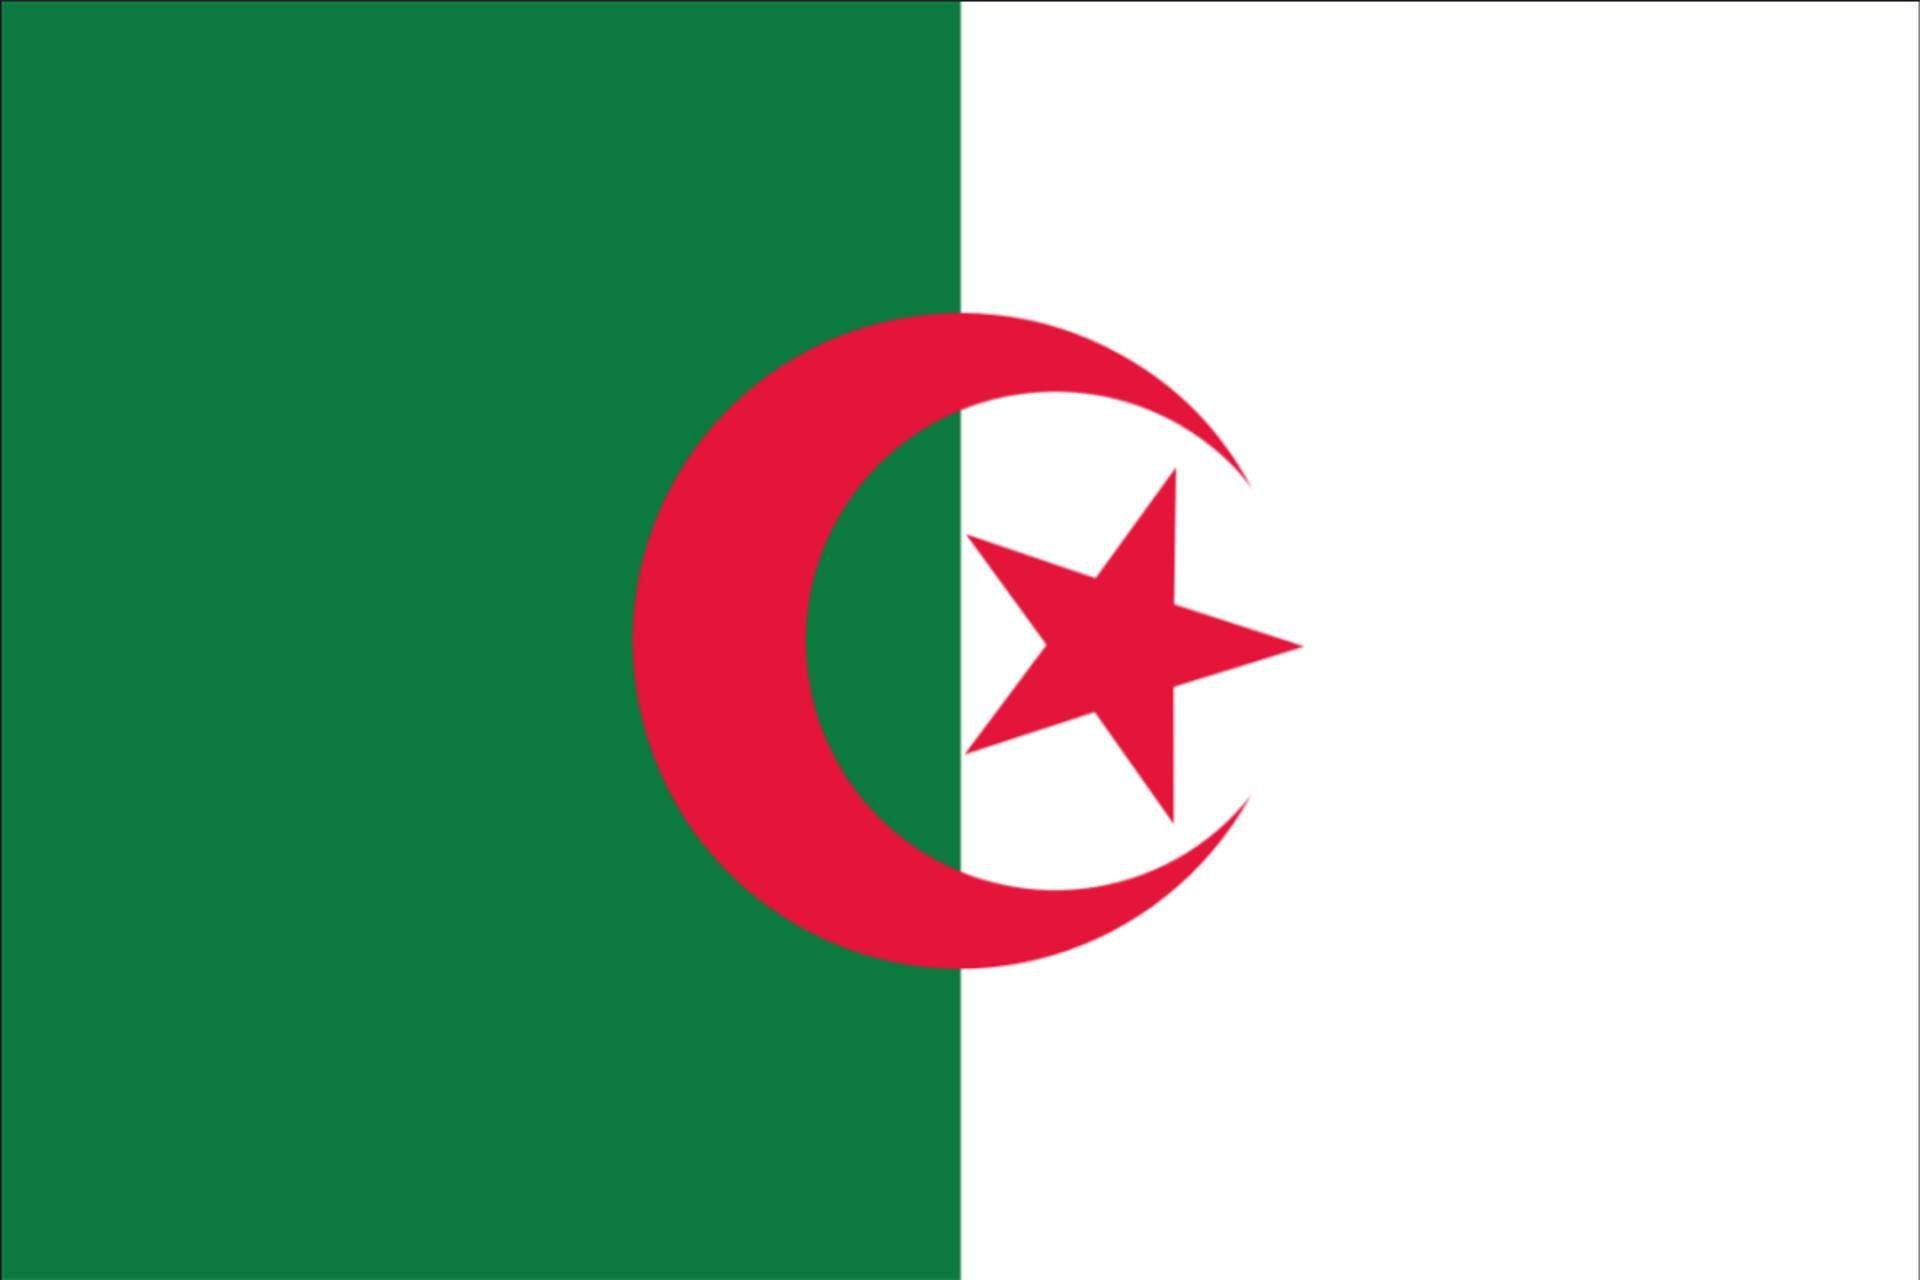 flaggenmeer Flagge Flagge Algerien 110 g/m² Querformat